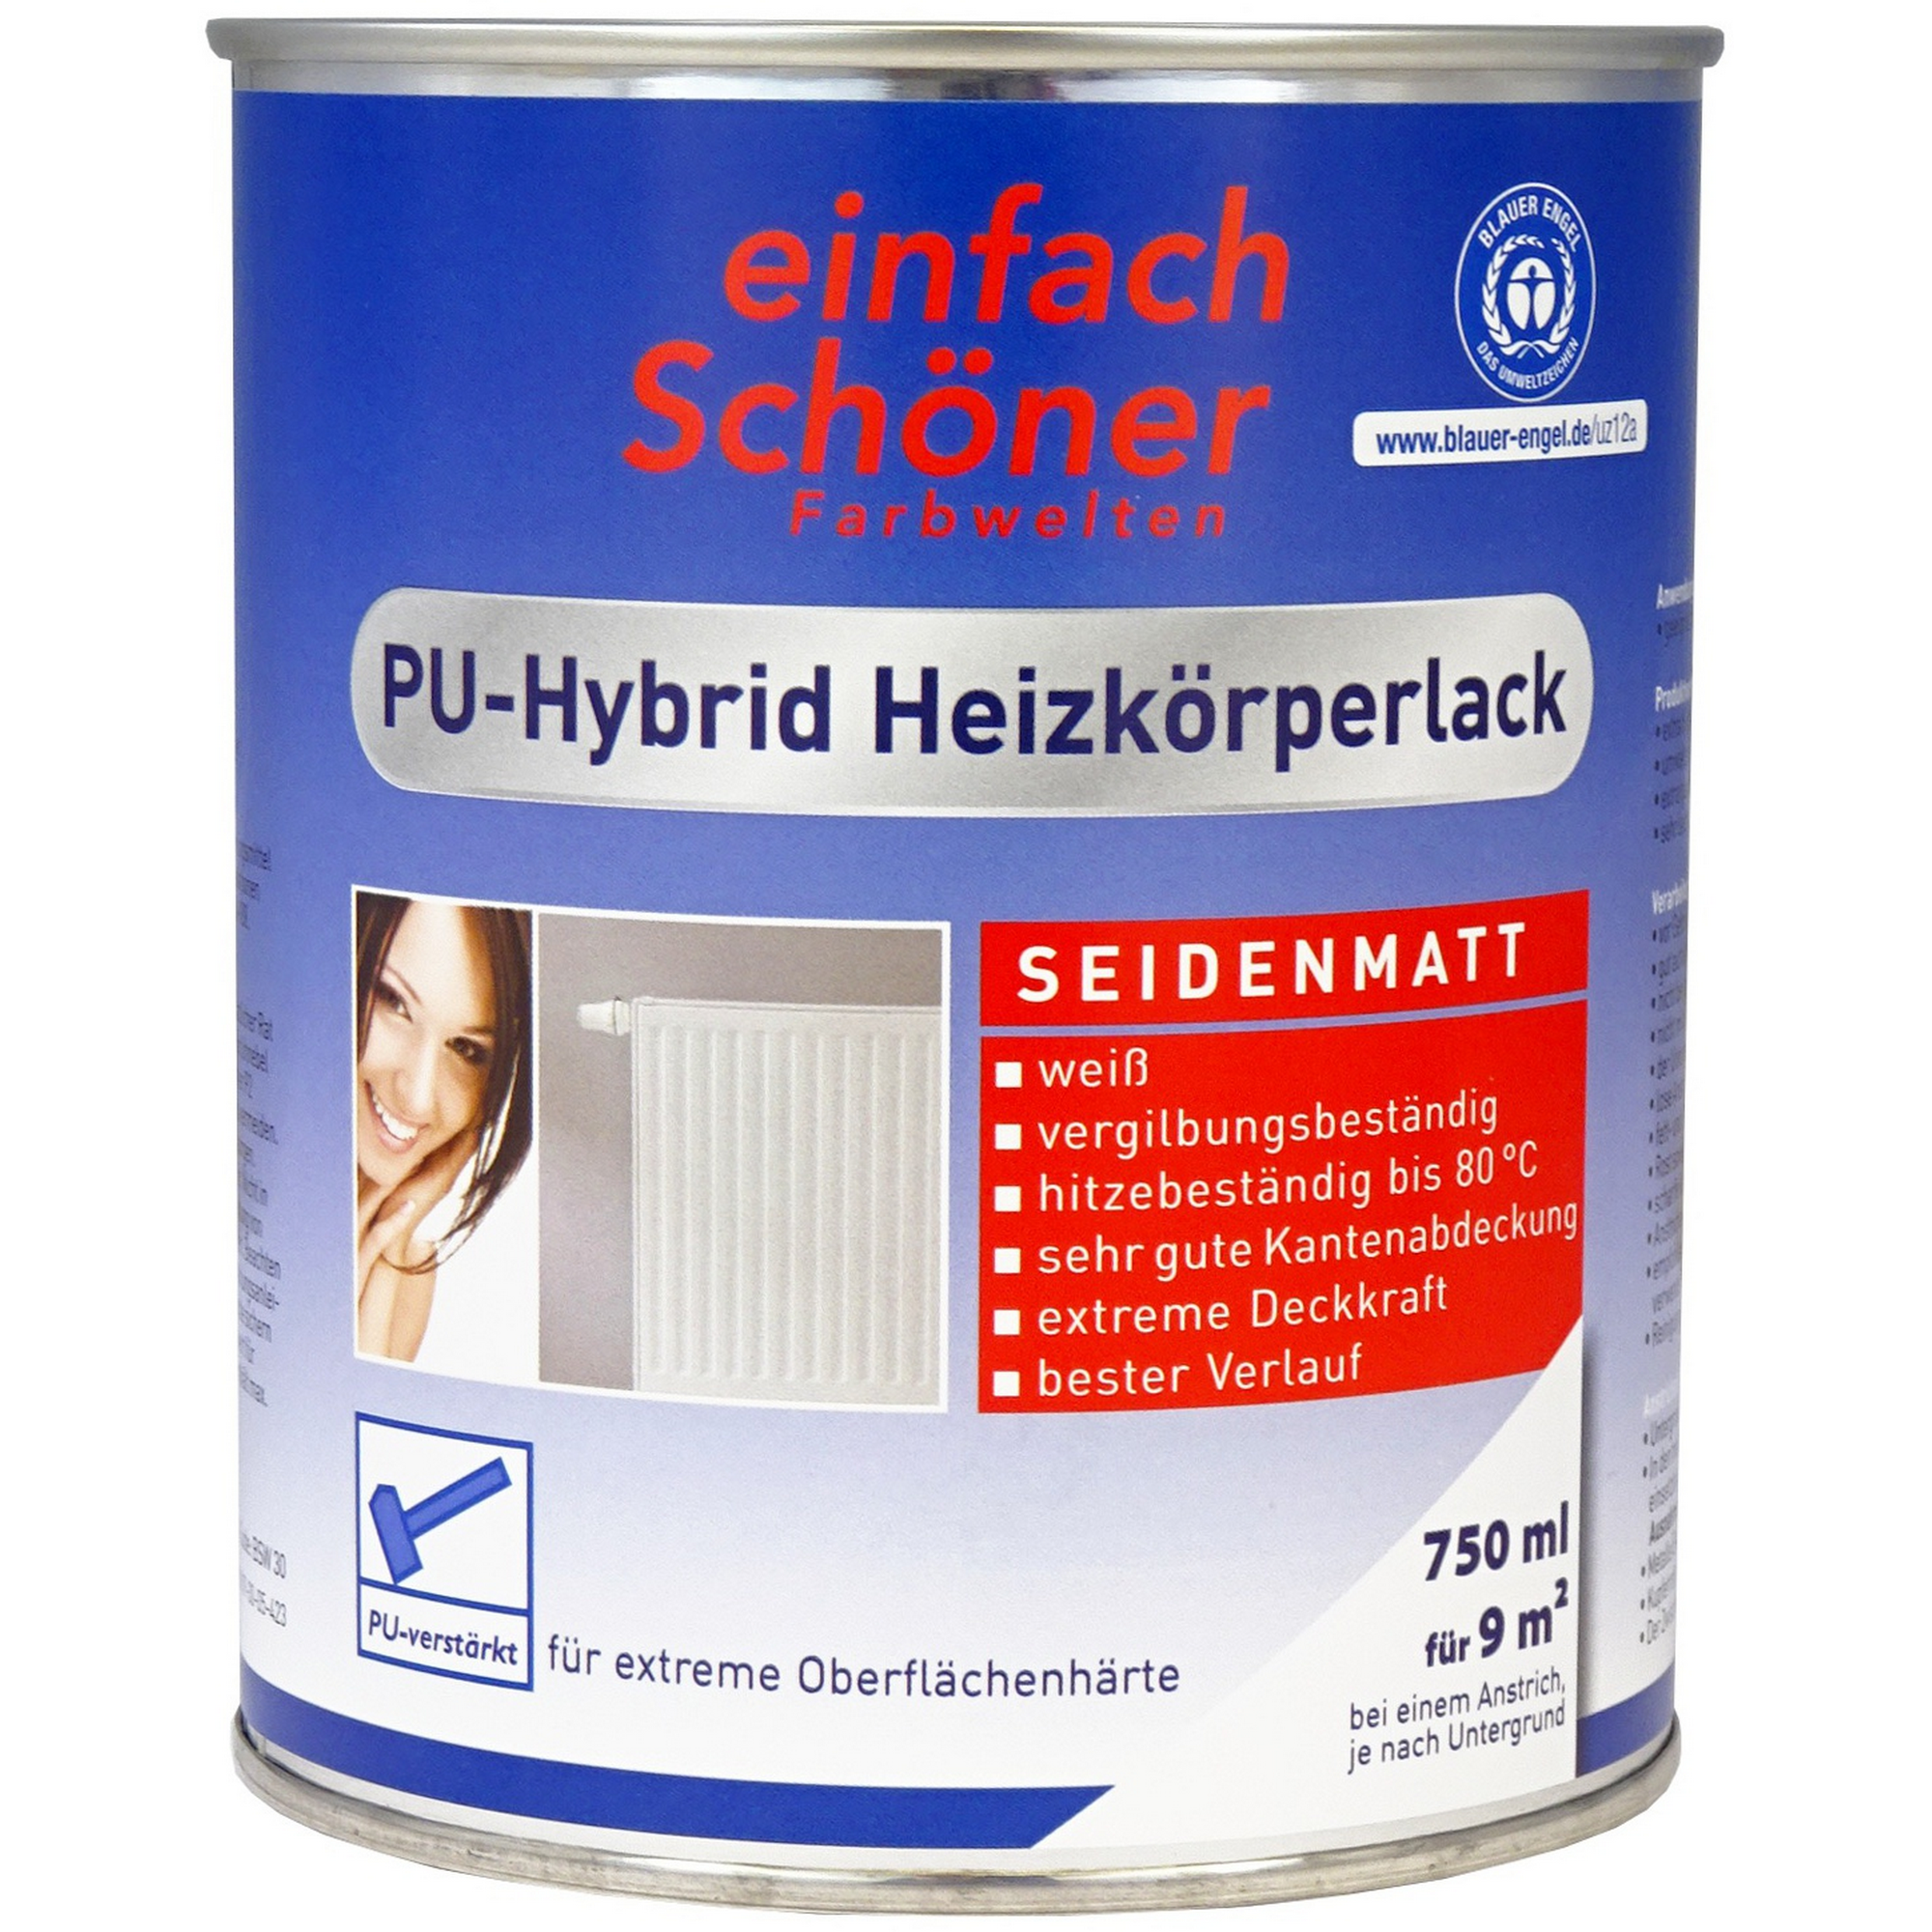 PU-Hybrid Heizkörperlack seidenmatt 750 ml + product picture